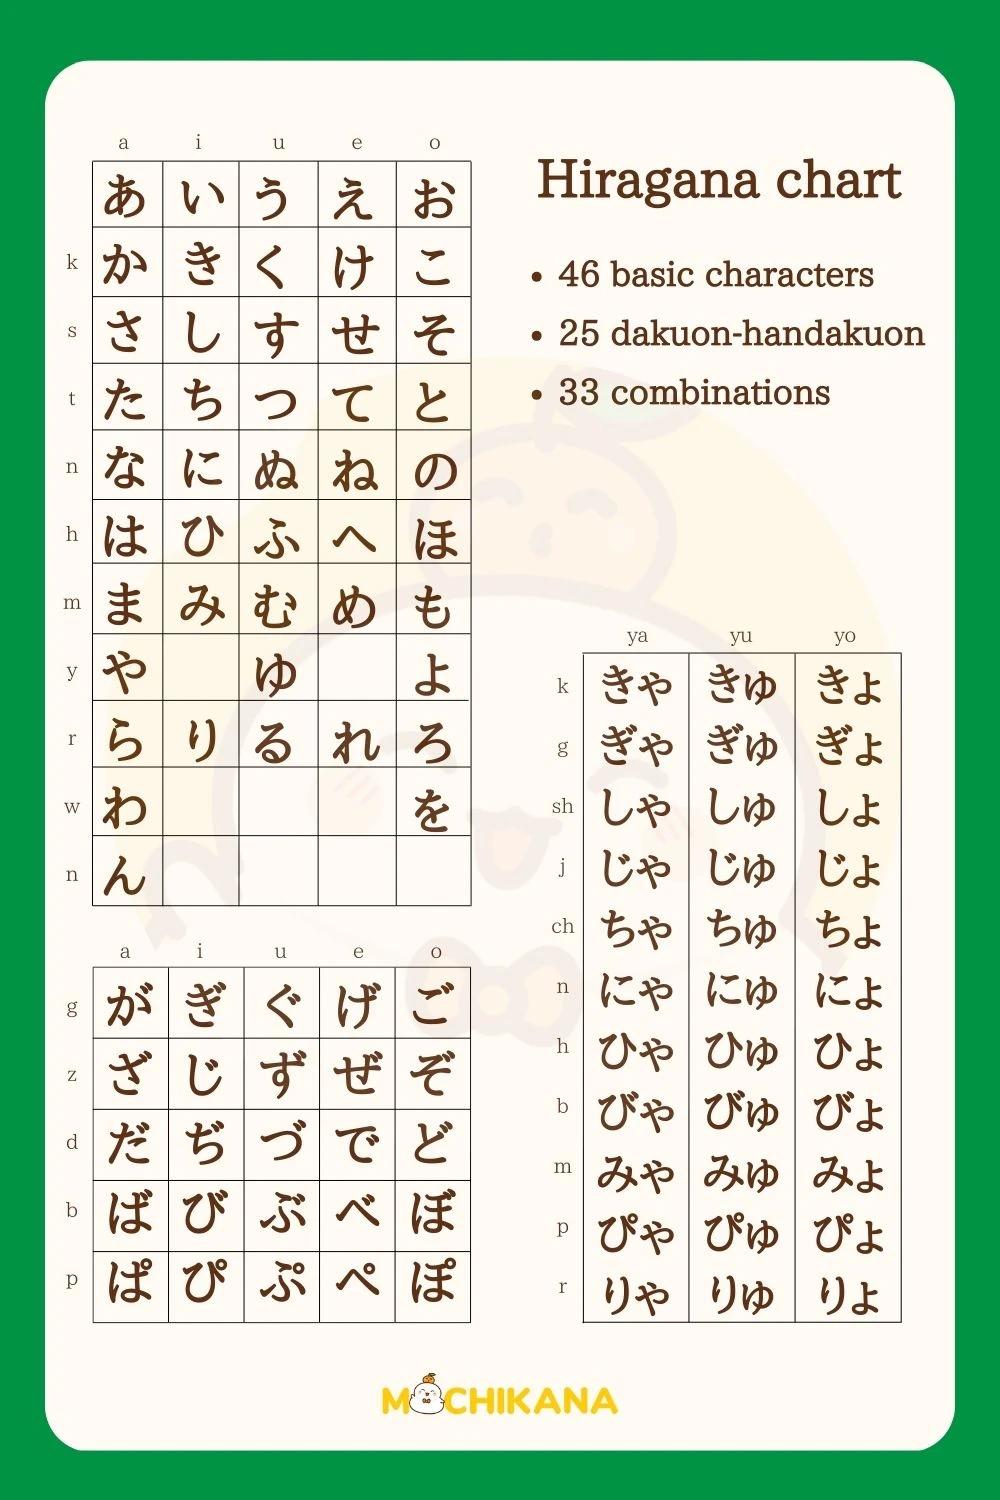 Hiragana chart for beginner